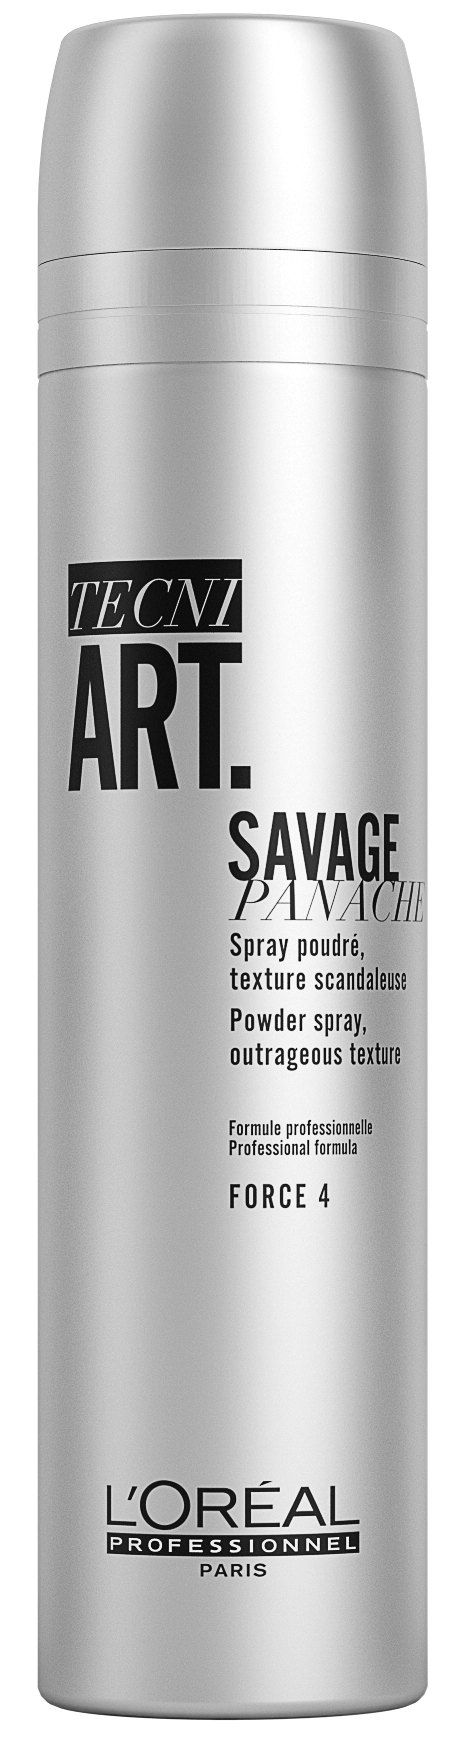 Tecni art Savage Panache Spray, 250ml